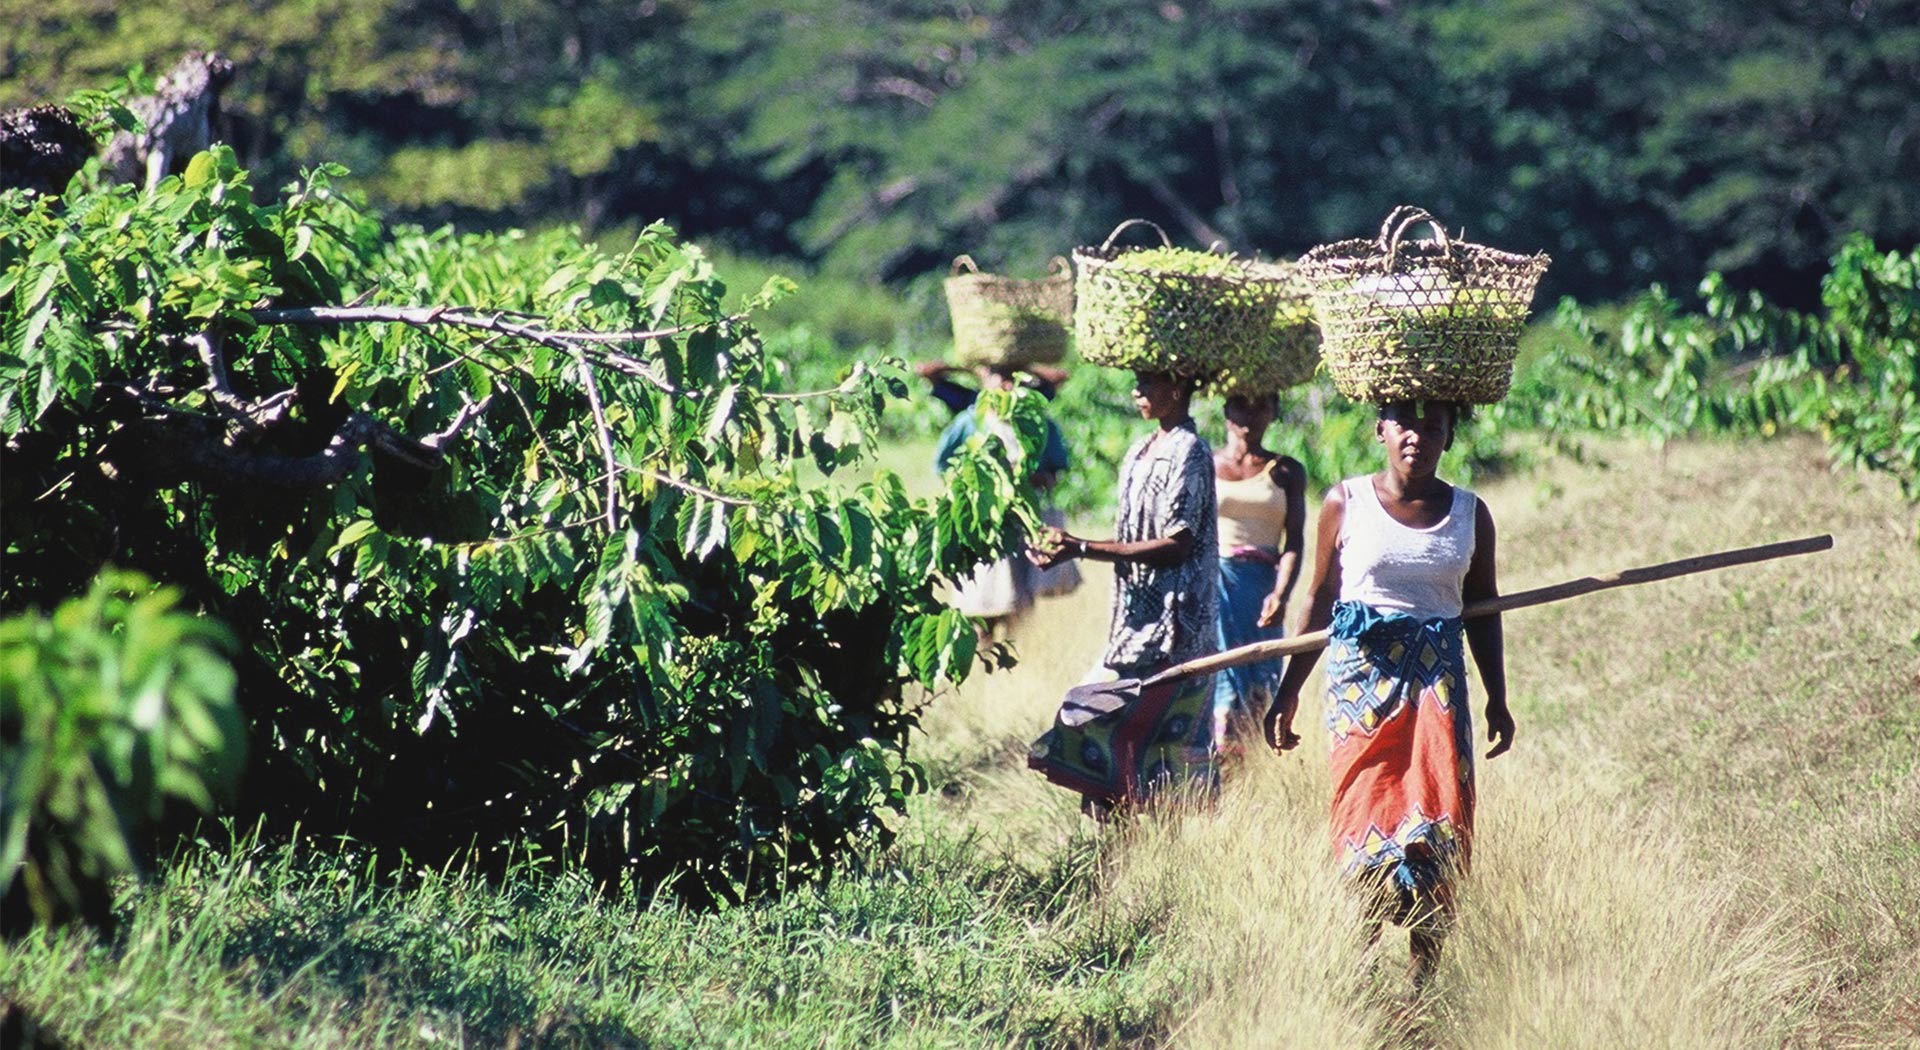 producer of essential oils from Madagascar